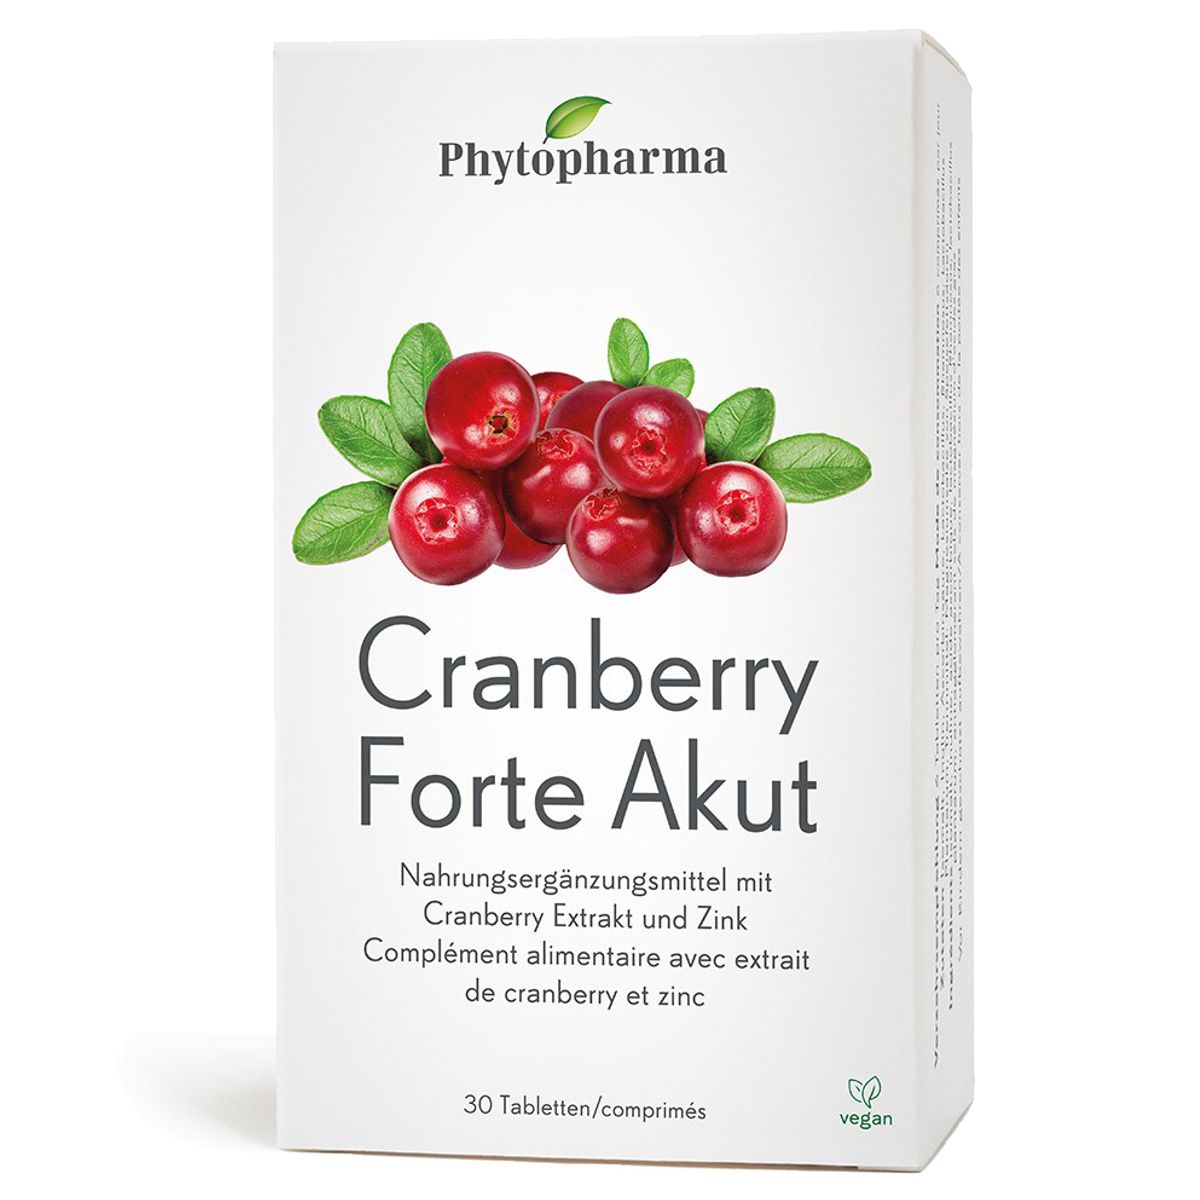 Phytopharma Cranberry Forte Akut Tabletten 30 Stück